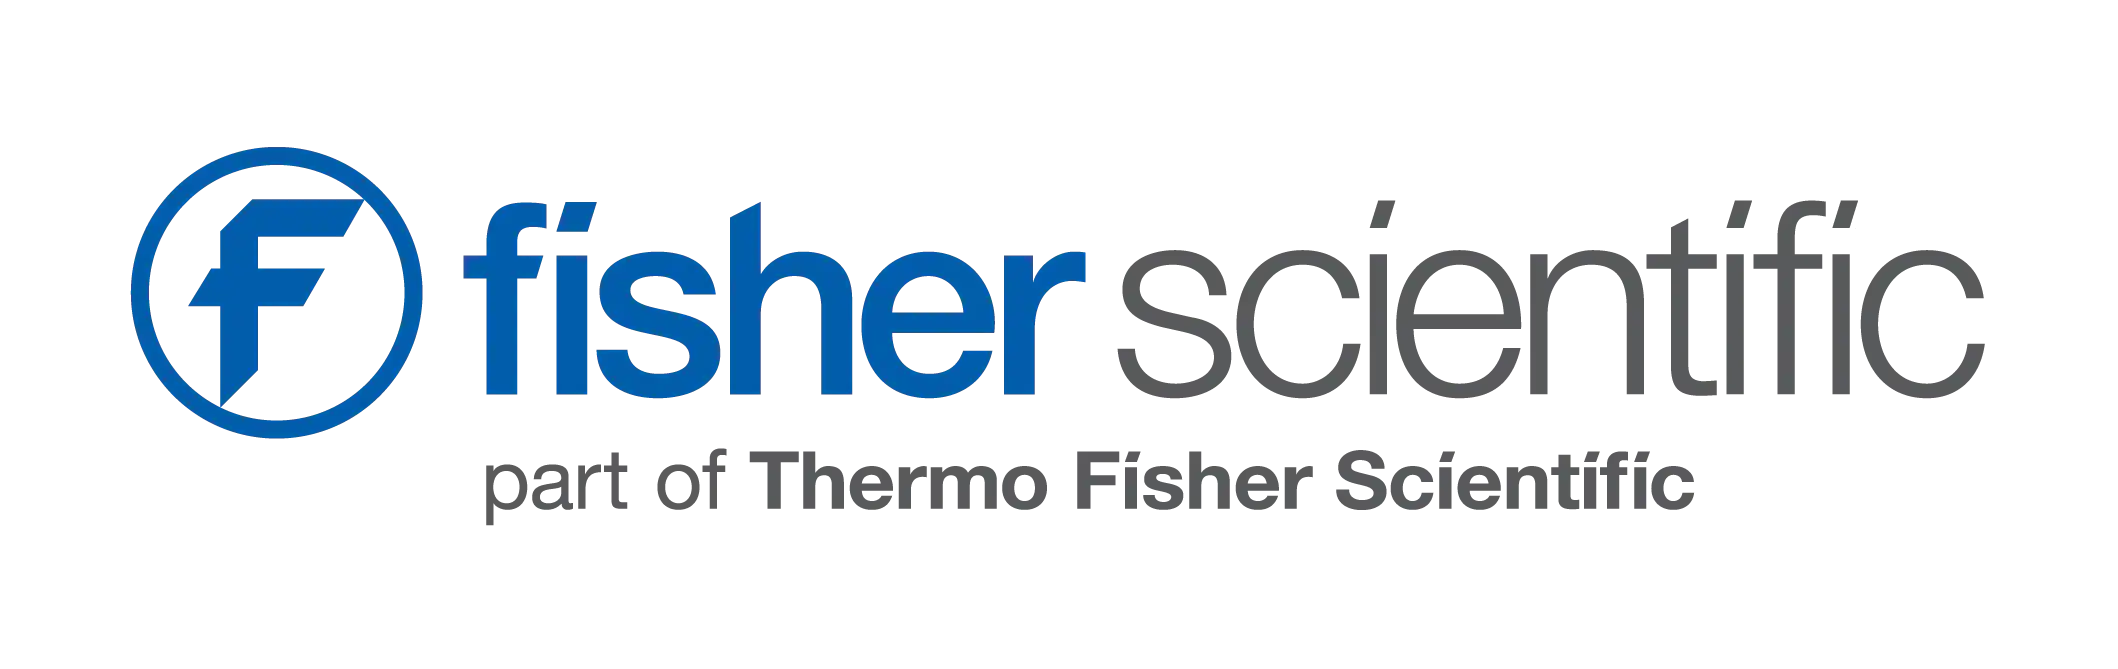 Fisher Scientific Logo